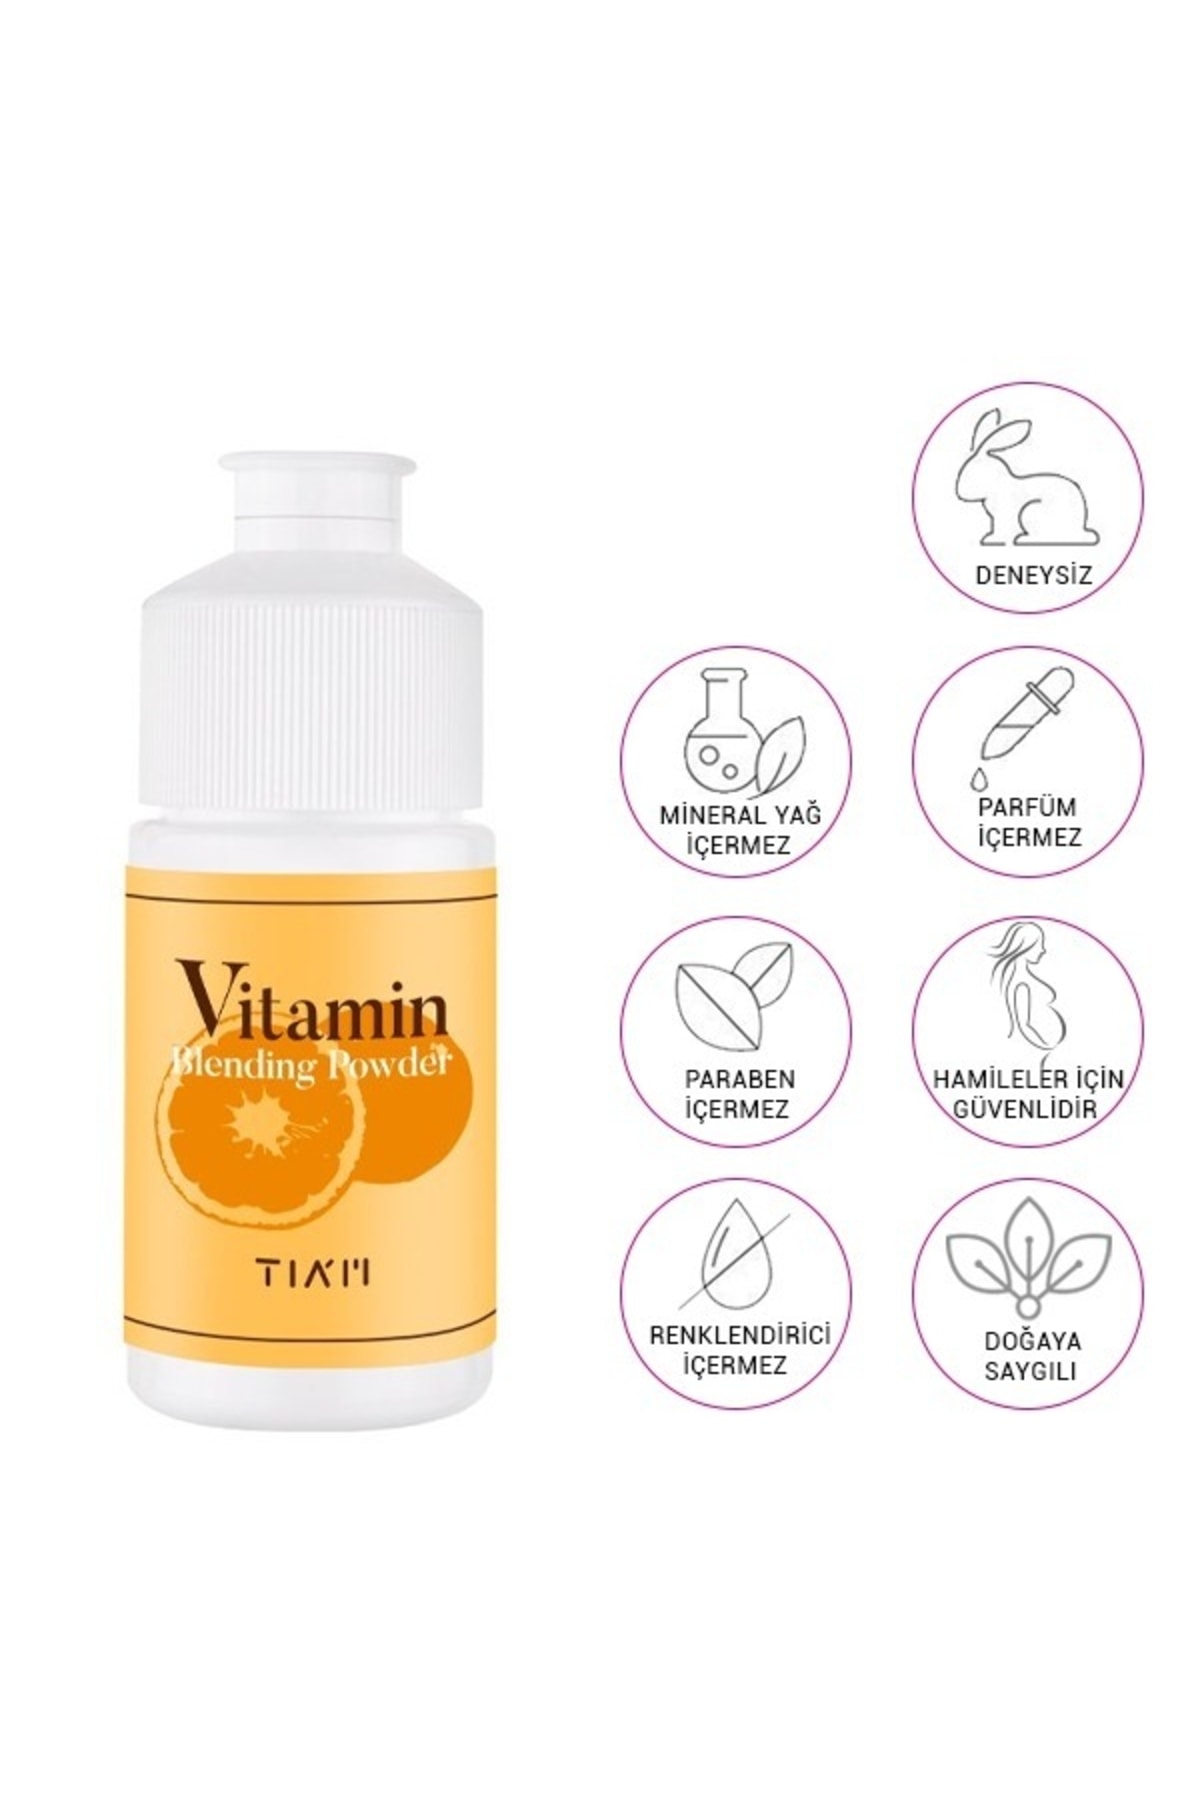 TIA'M Vitamin Blending Powder 10 gr (VİTAMİNLİ KARIŞTIRMA TOZU)